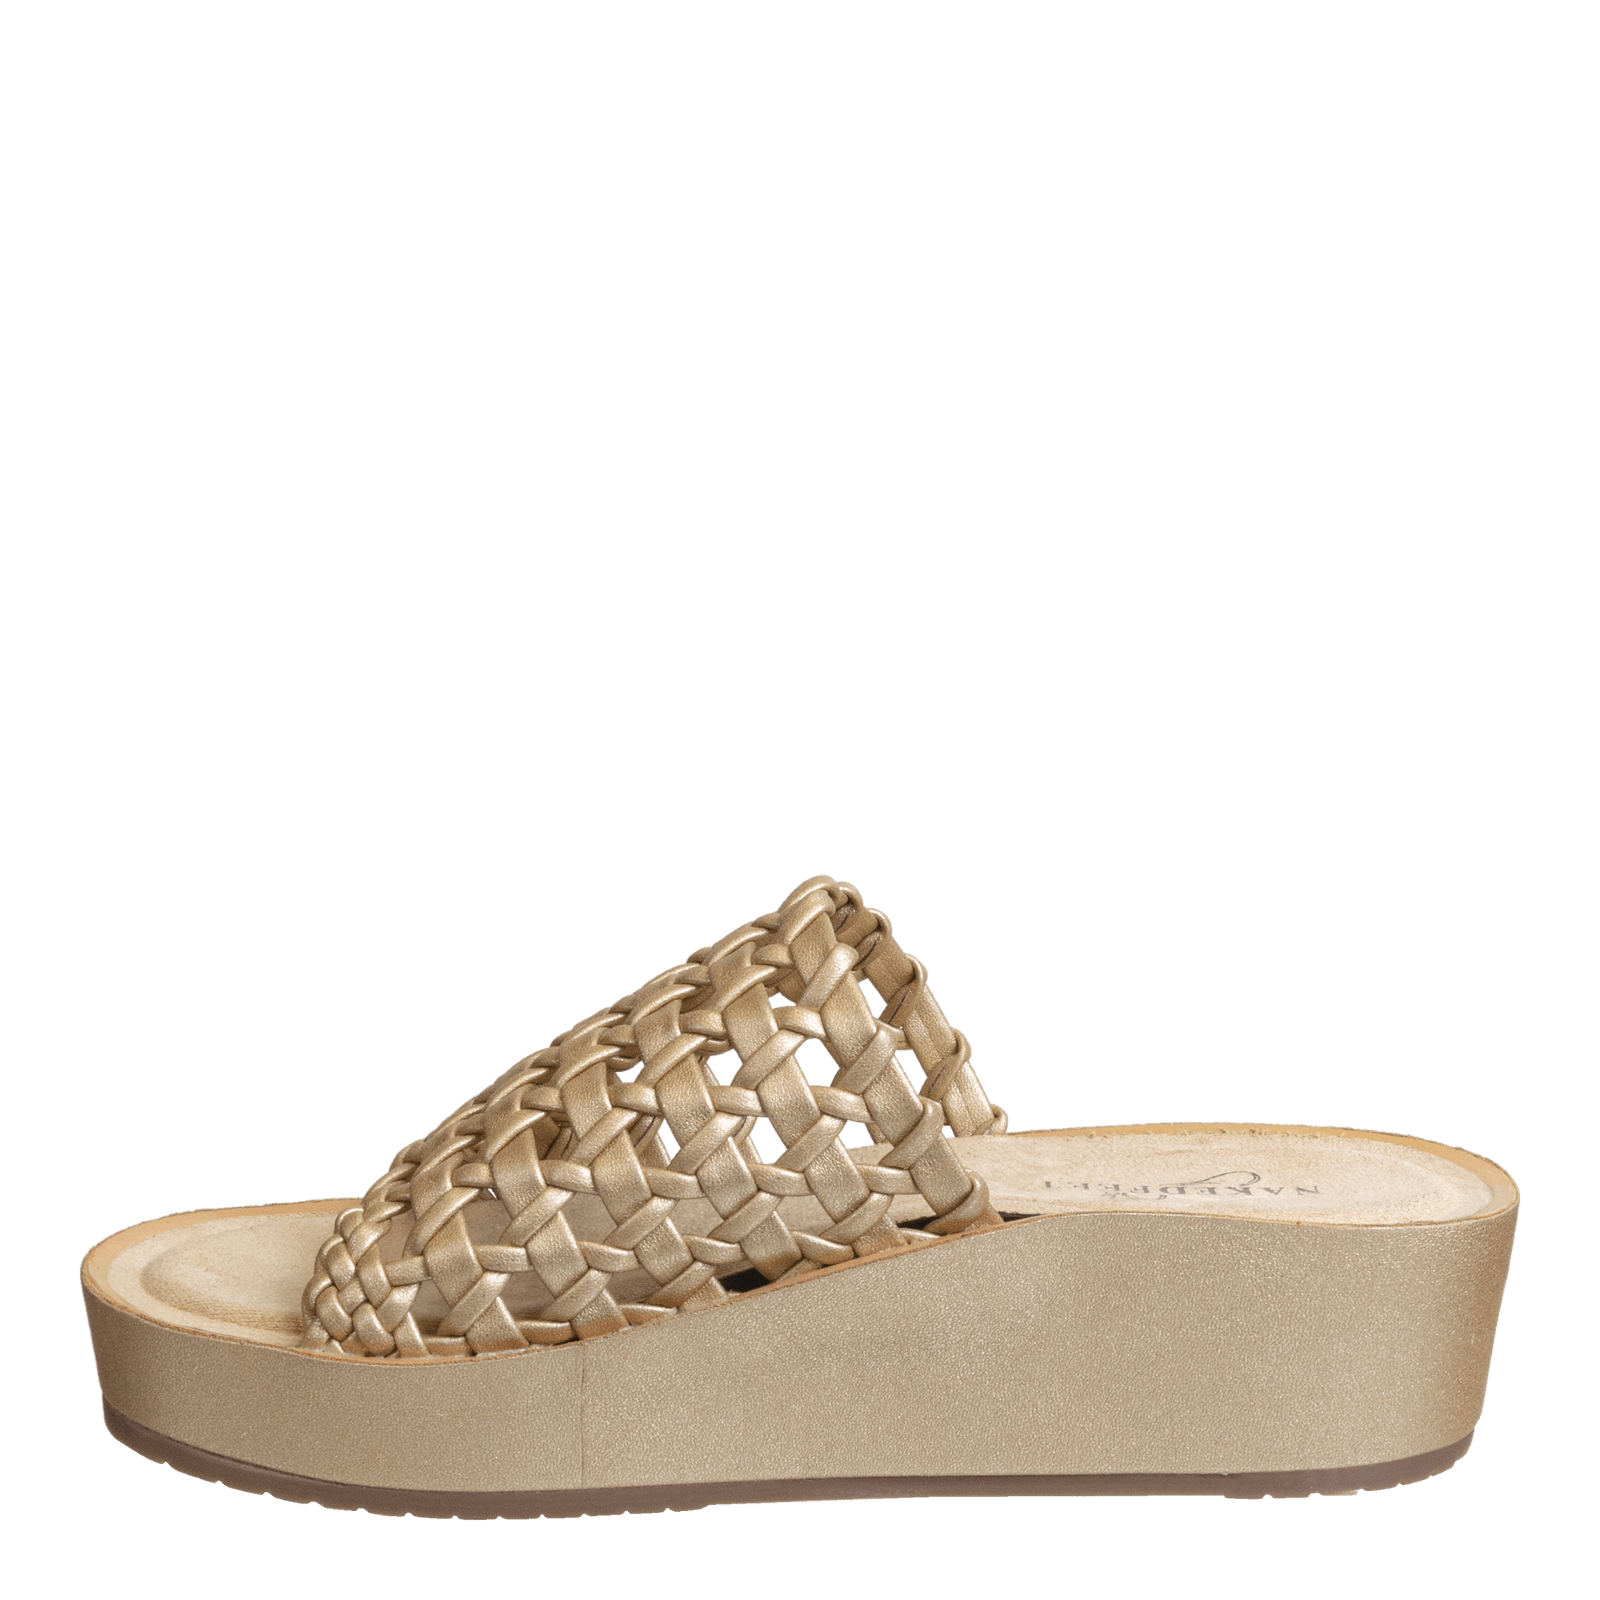 NAKED FEET - CYPRUS in GOLD Platform Sandals WOMEN FOOTWEAR NAKED FEET 